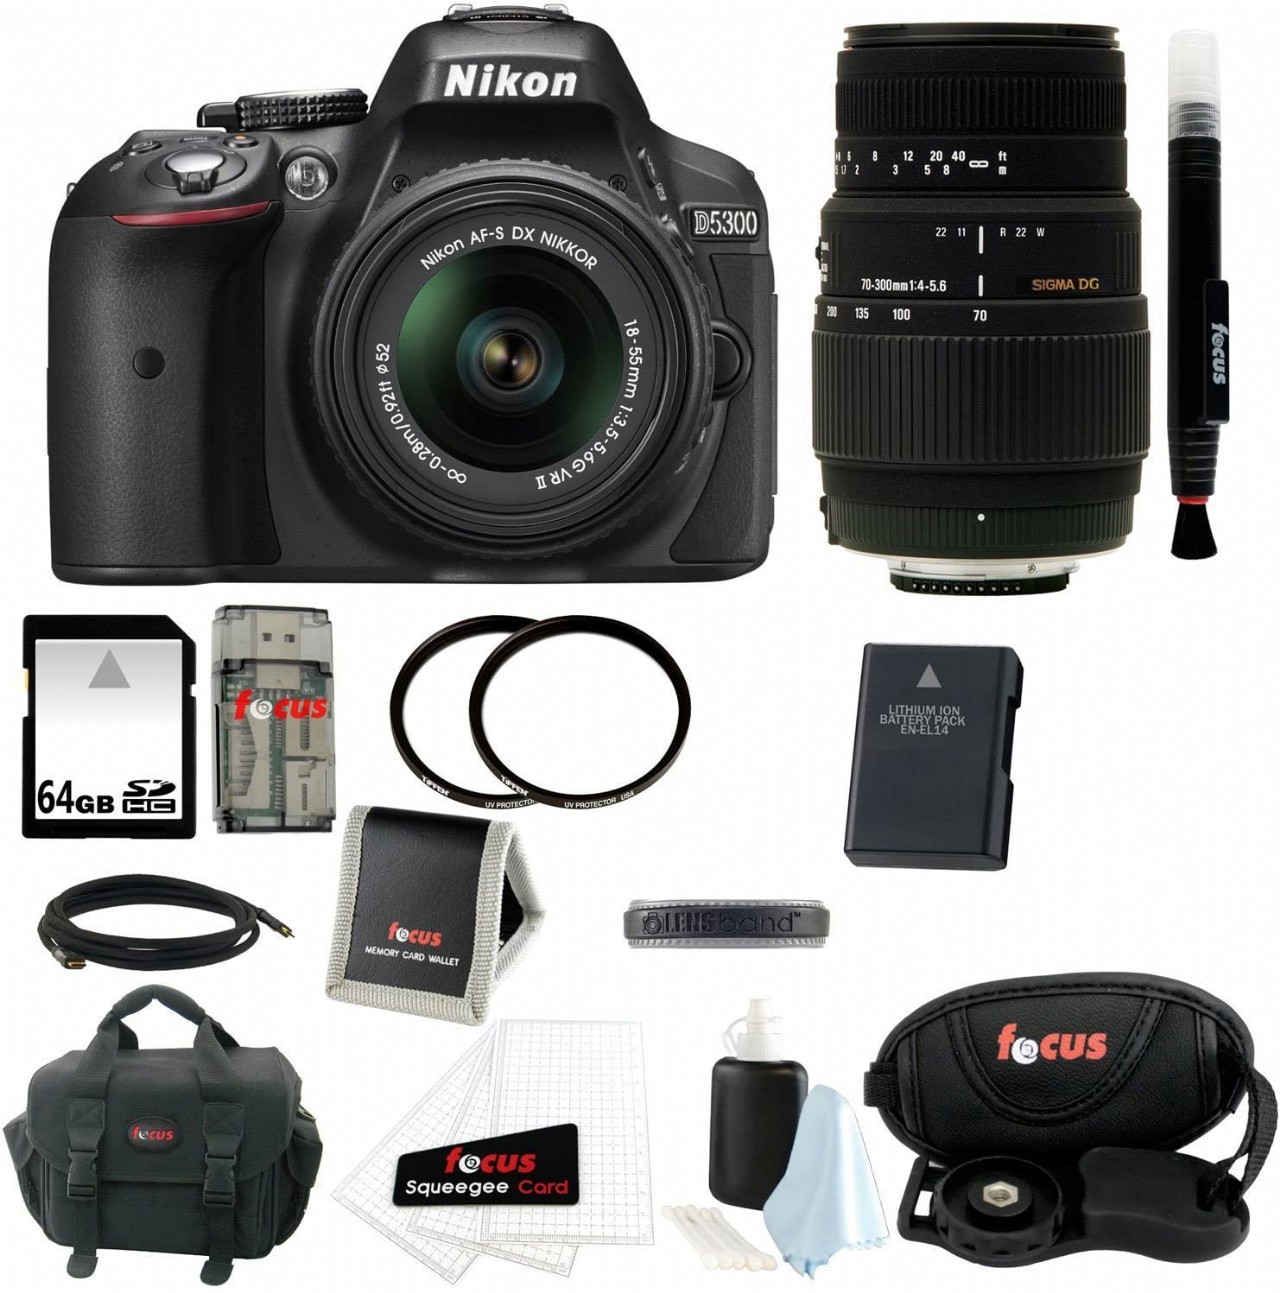 Nikon D5300 DSLR Camera with 18-55mm VR NIKKOR Zoom Lens (Black) w/ Sigma 70-300mm Macro Lens